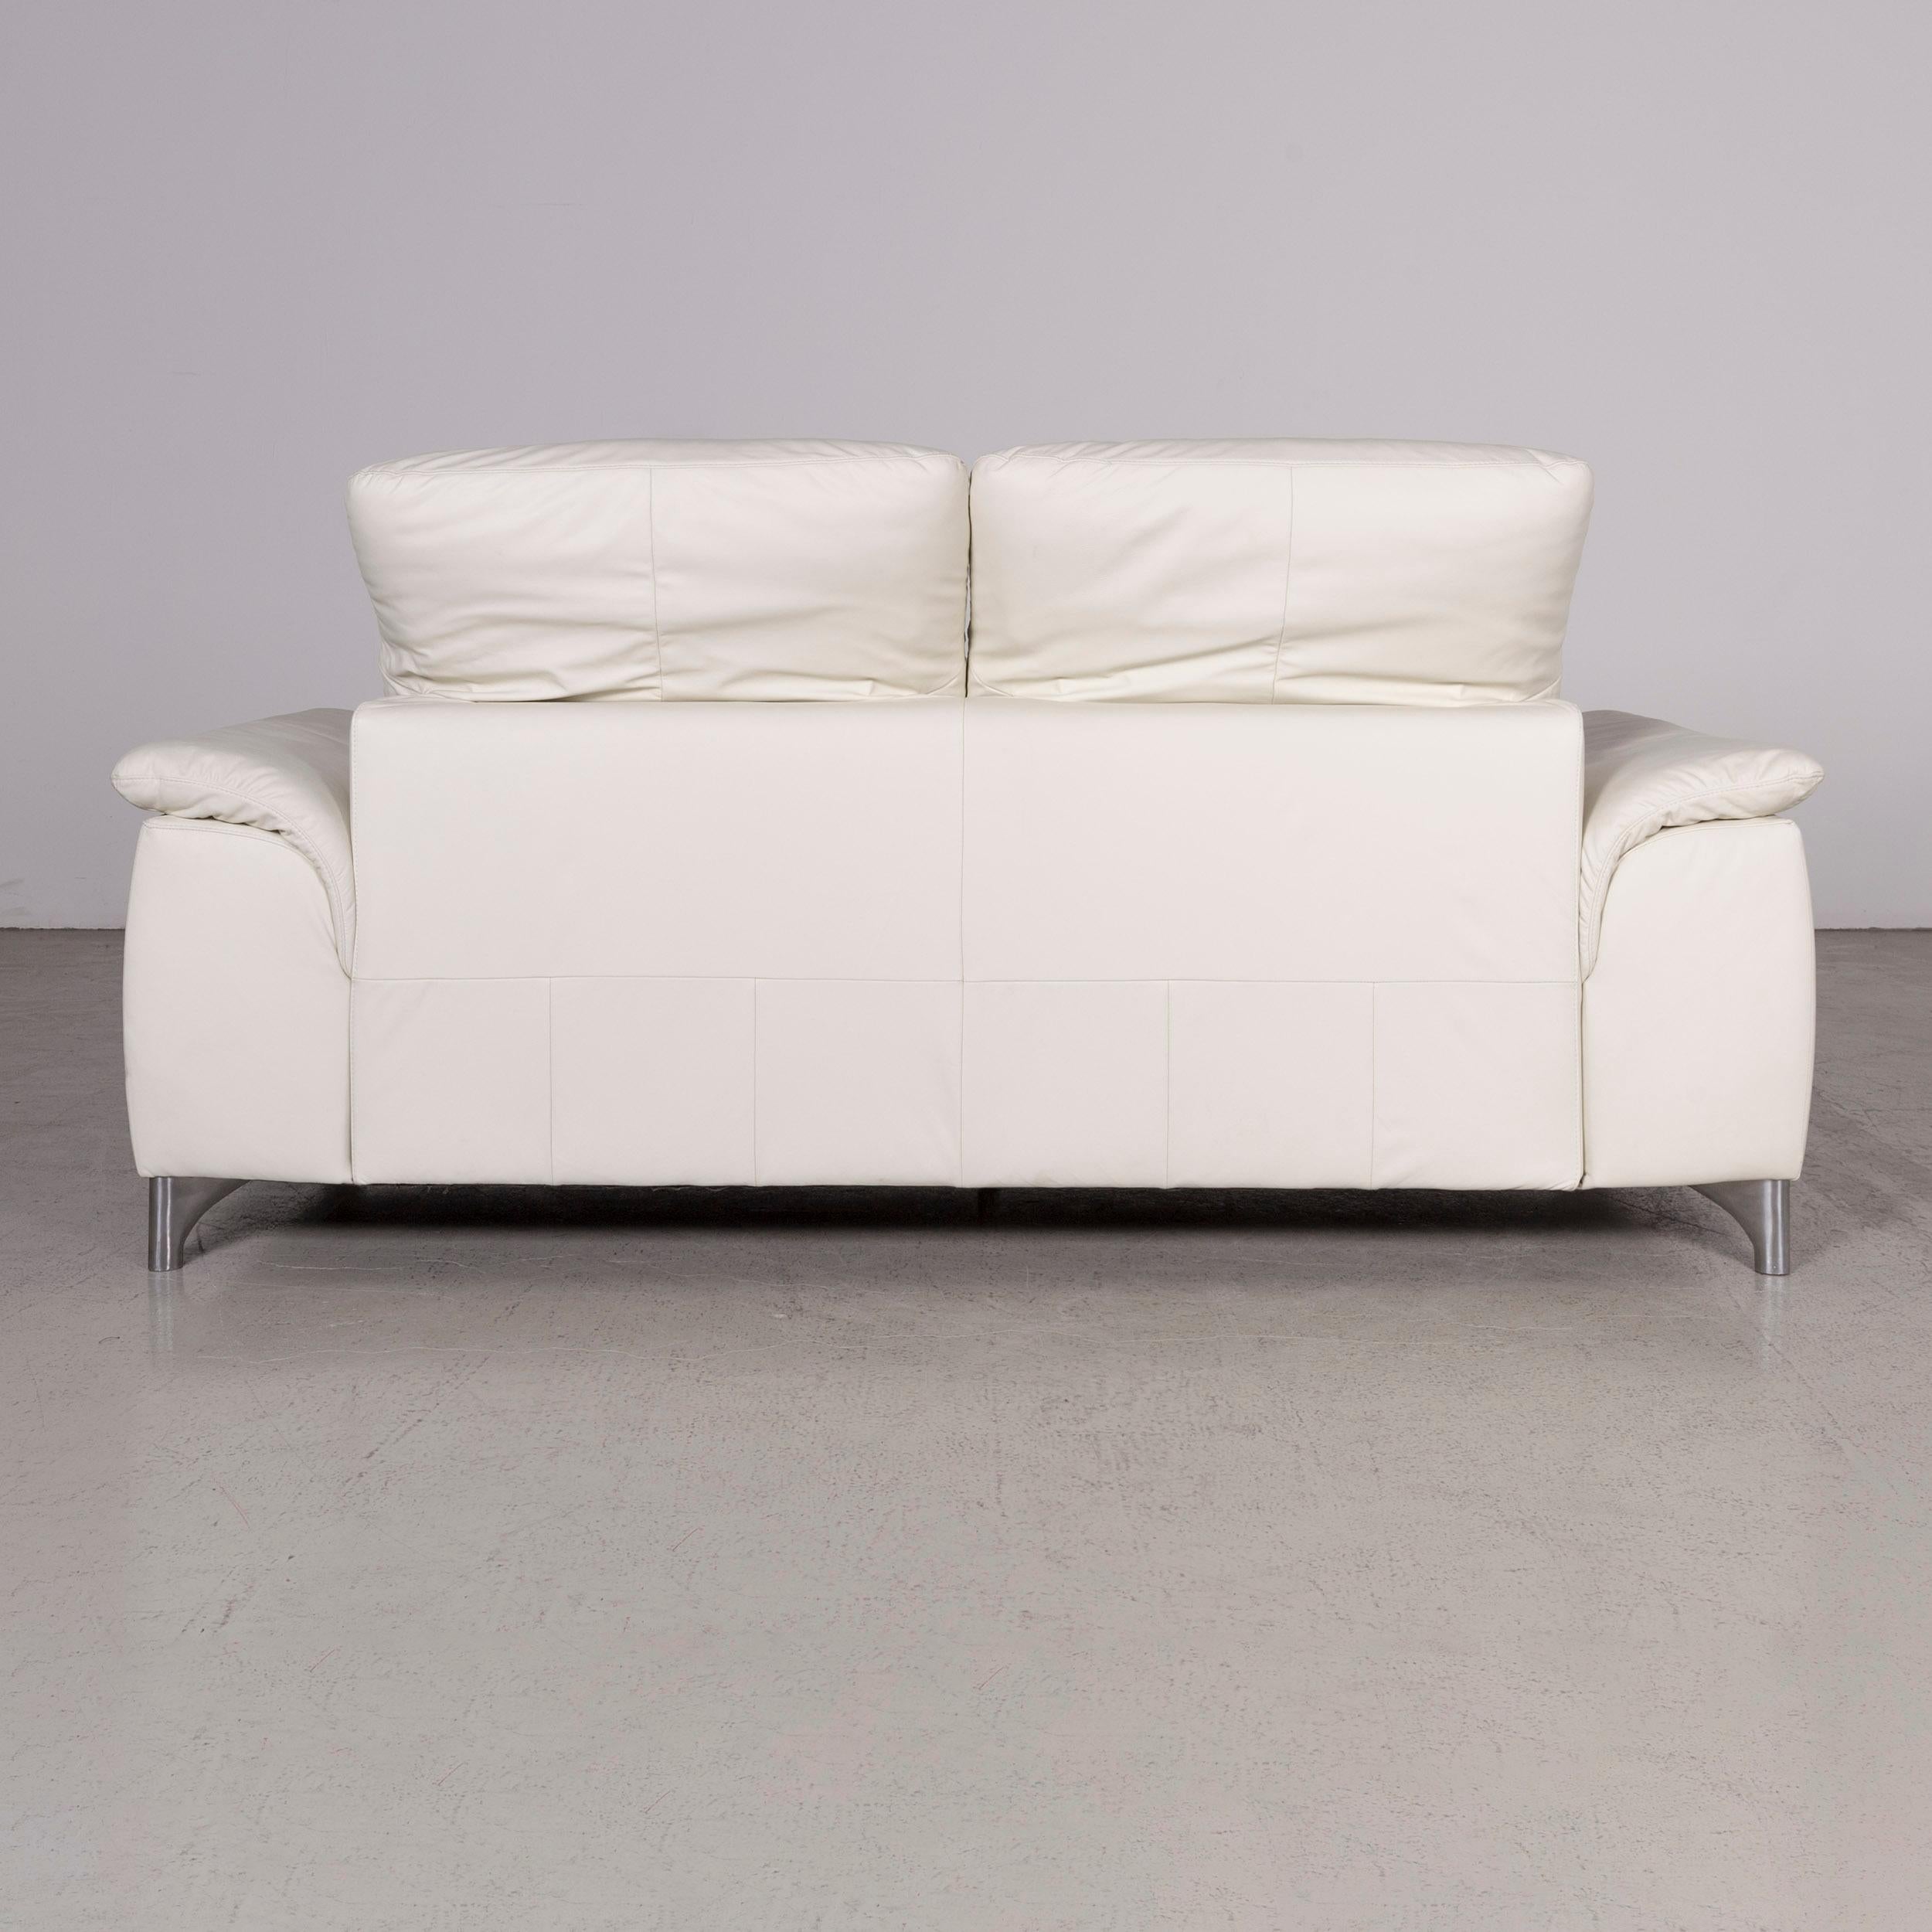 Willi Schillig Sinaatra Designer Leather Sofa White Genuine Leather Two-Seat For Sale 2